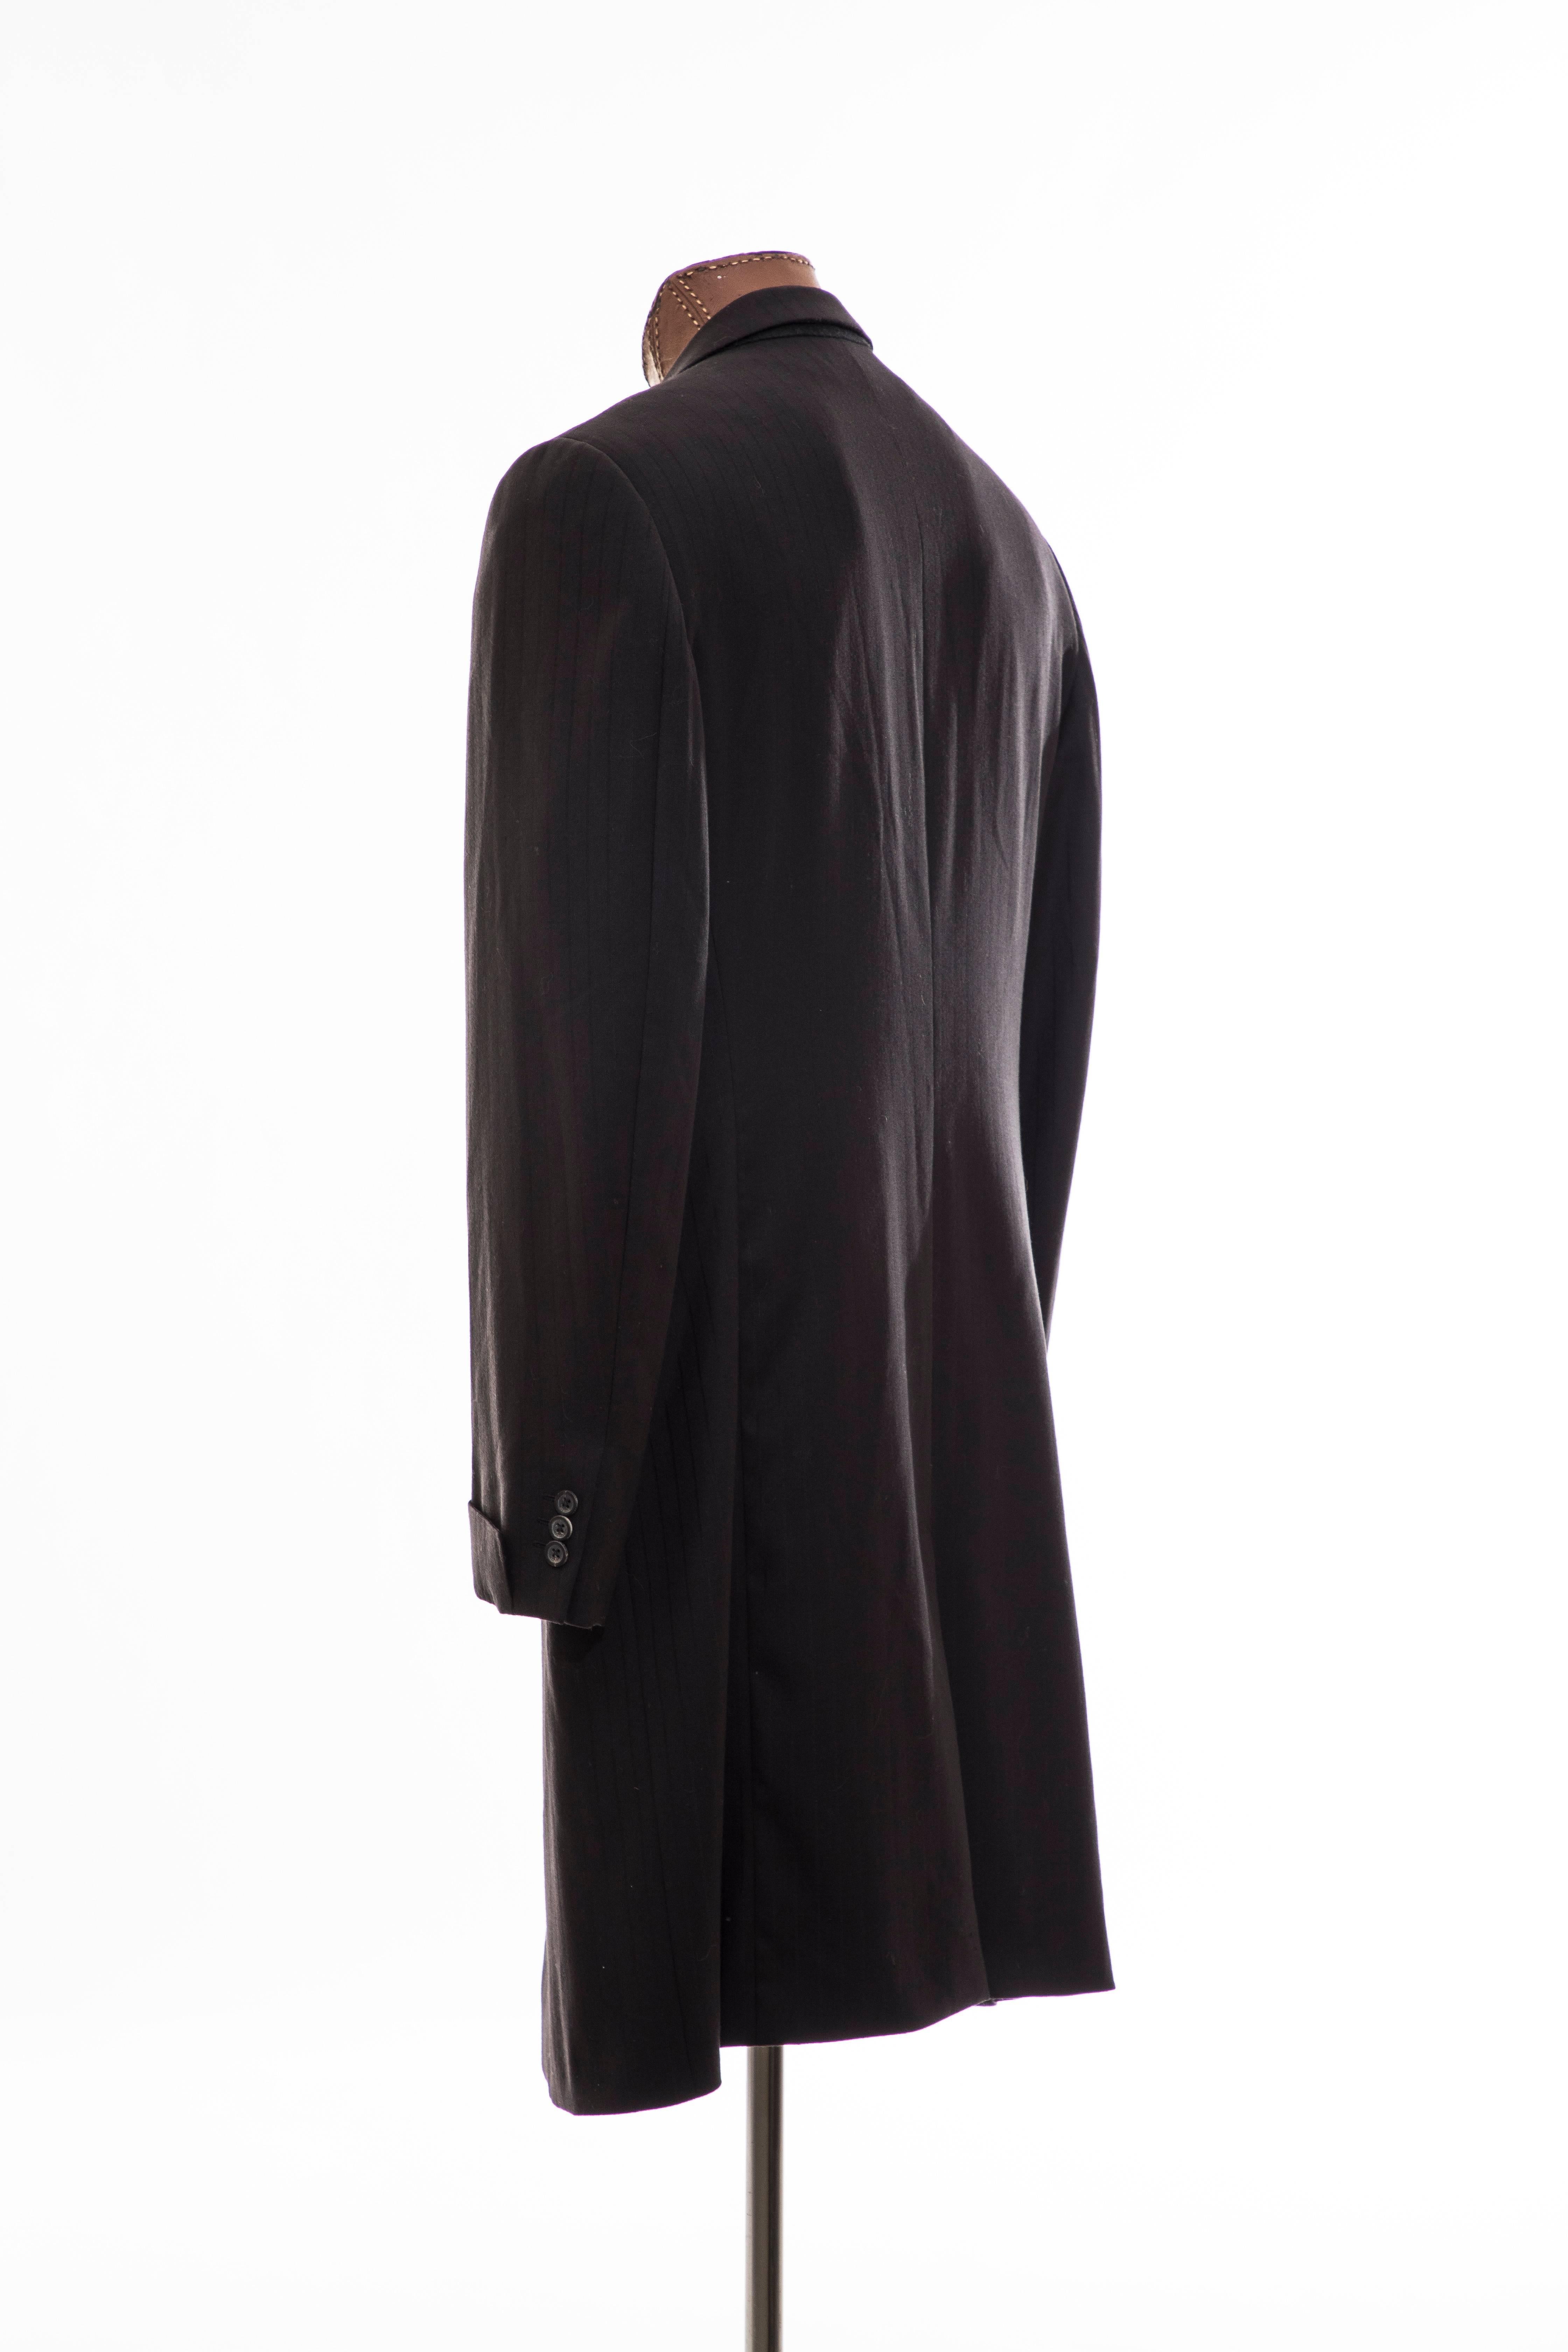 Gianni Versace Couture Men's Black Pinstriped Wool Overcoat, Circa 1990's im Angebot 1